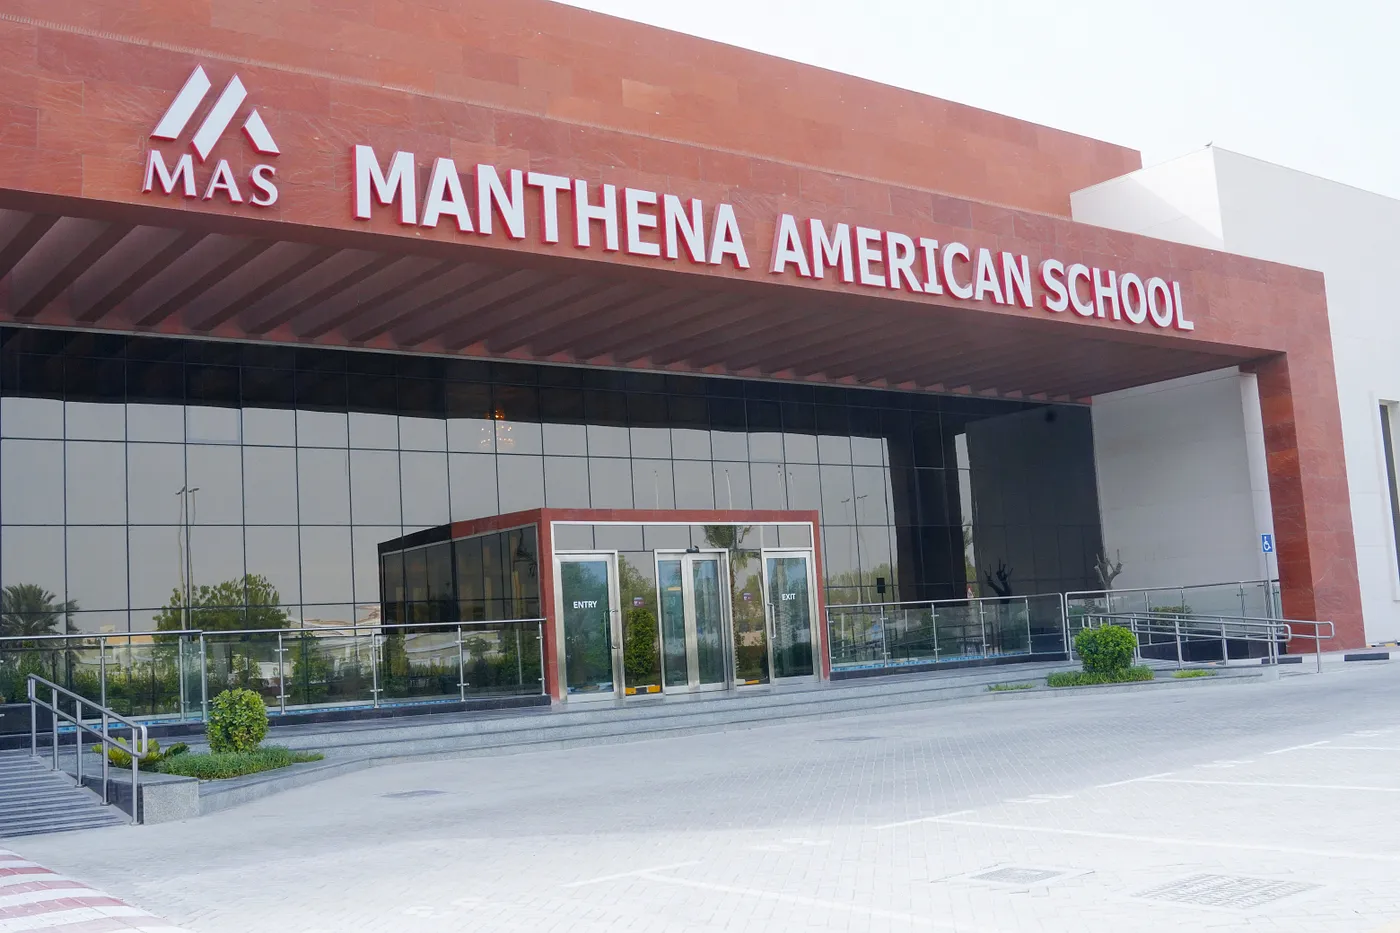 Manthena American School